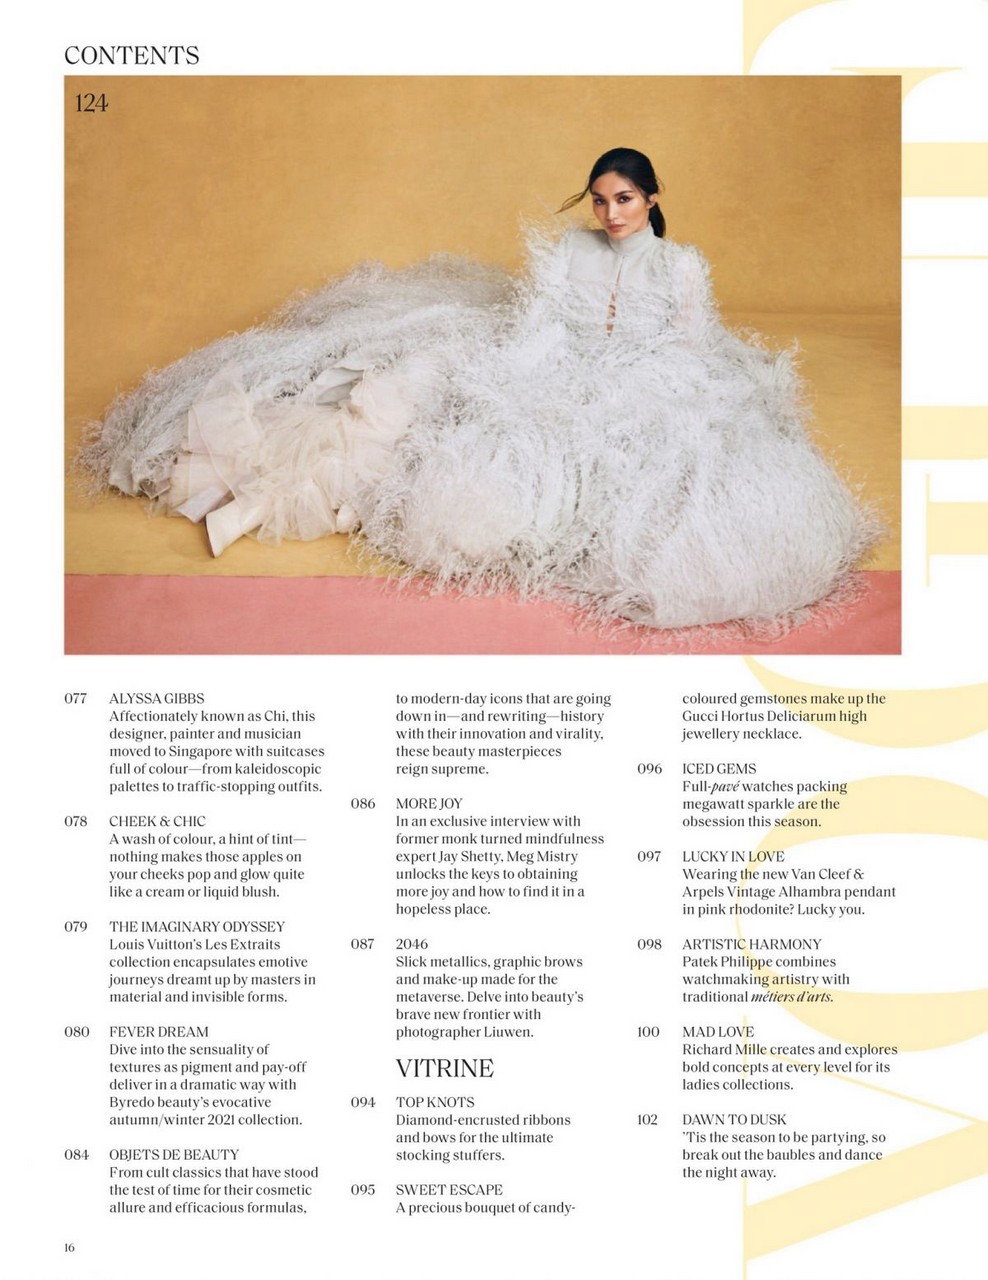 Gemma Chan Vogue Magazine Singapore November December